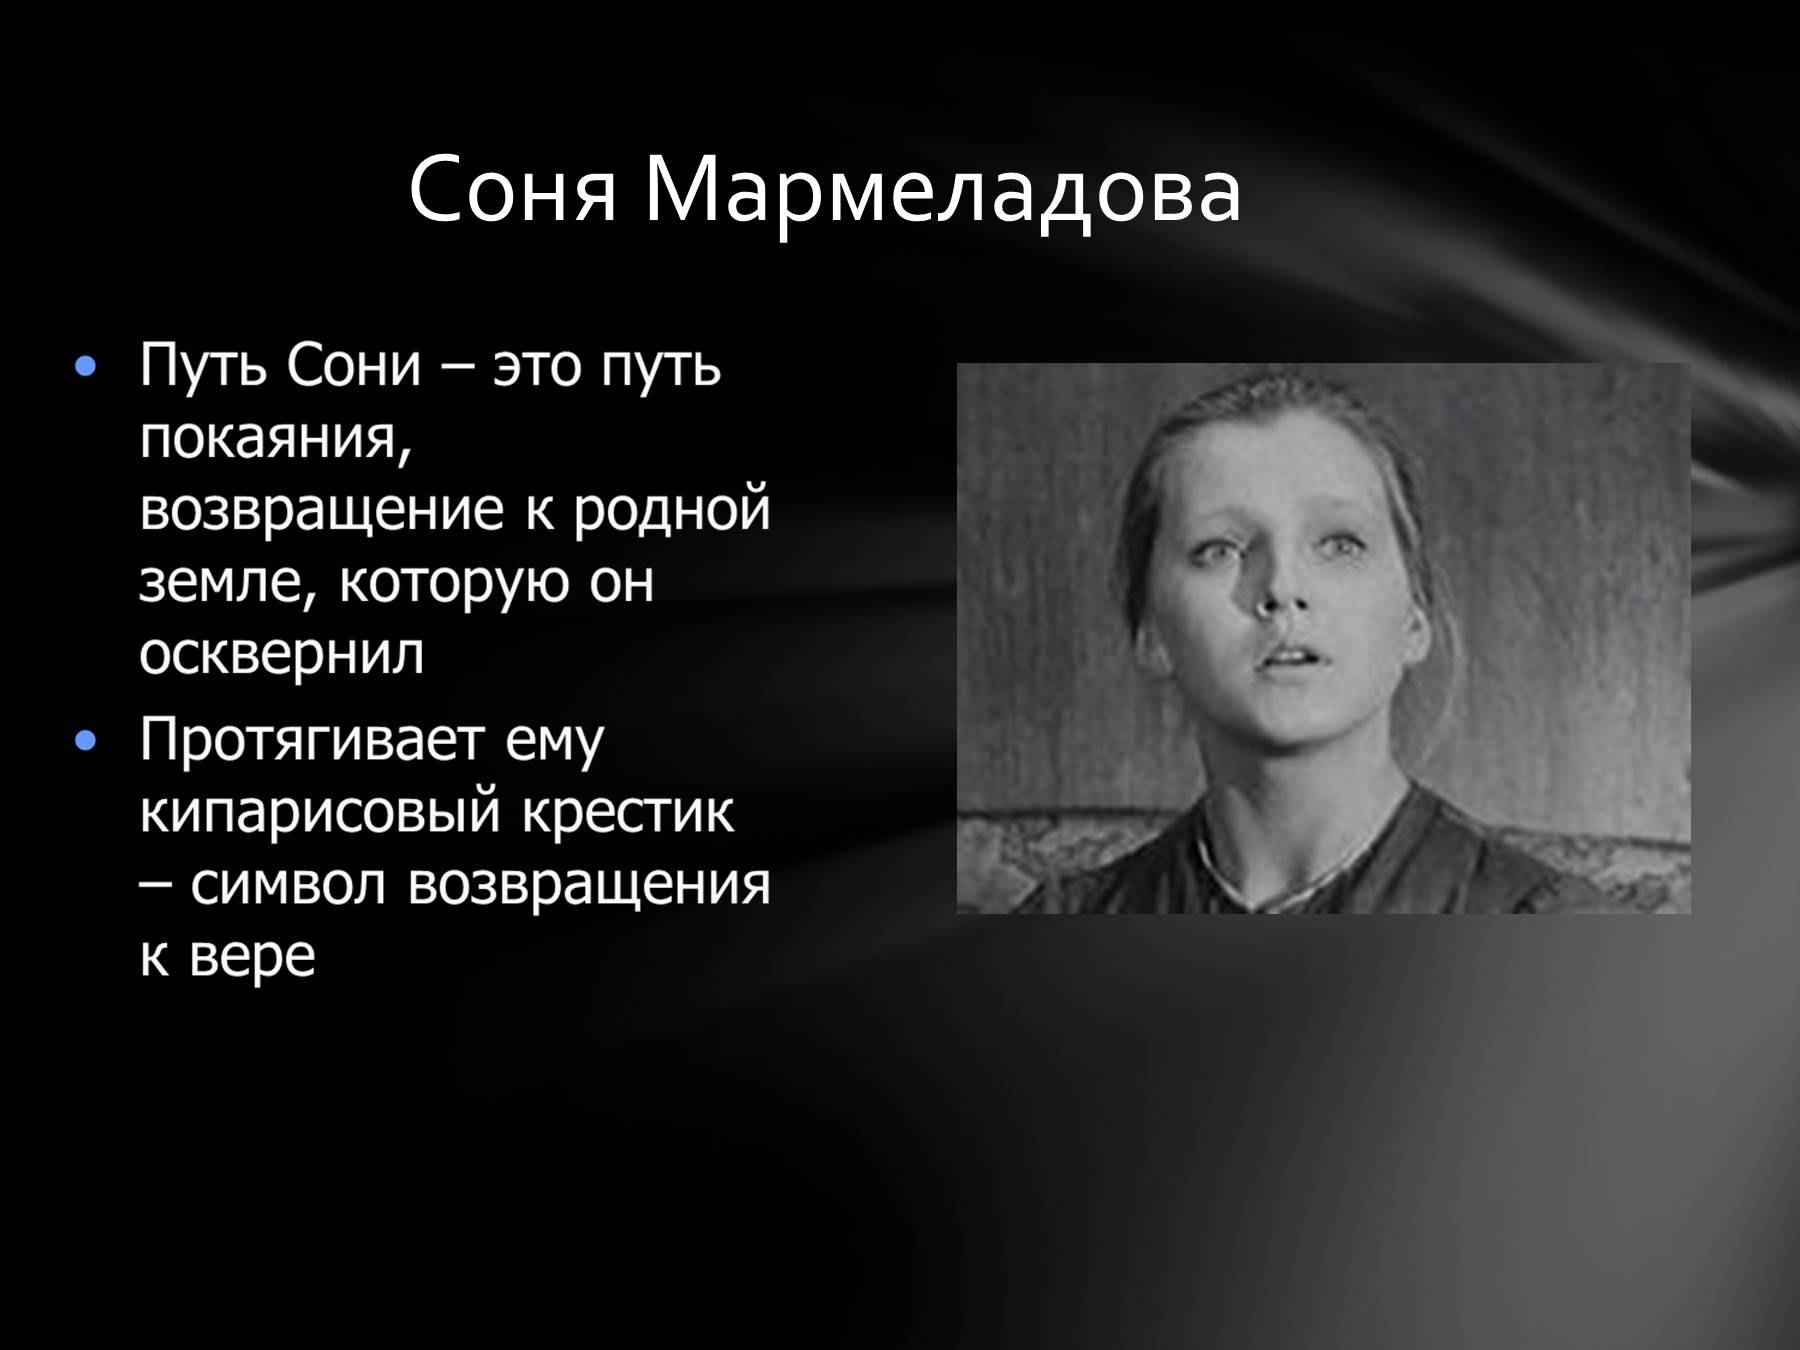 Софья семёновна Мармеладова